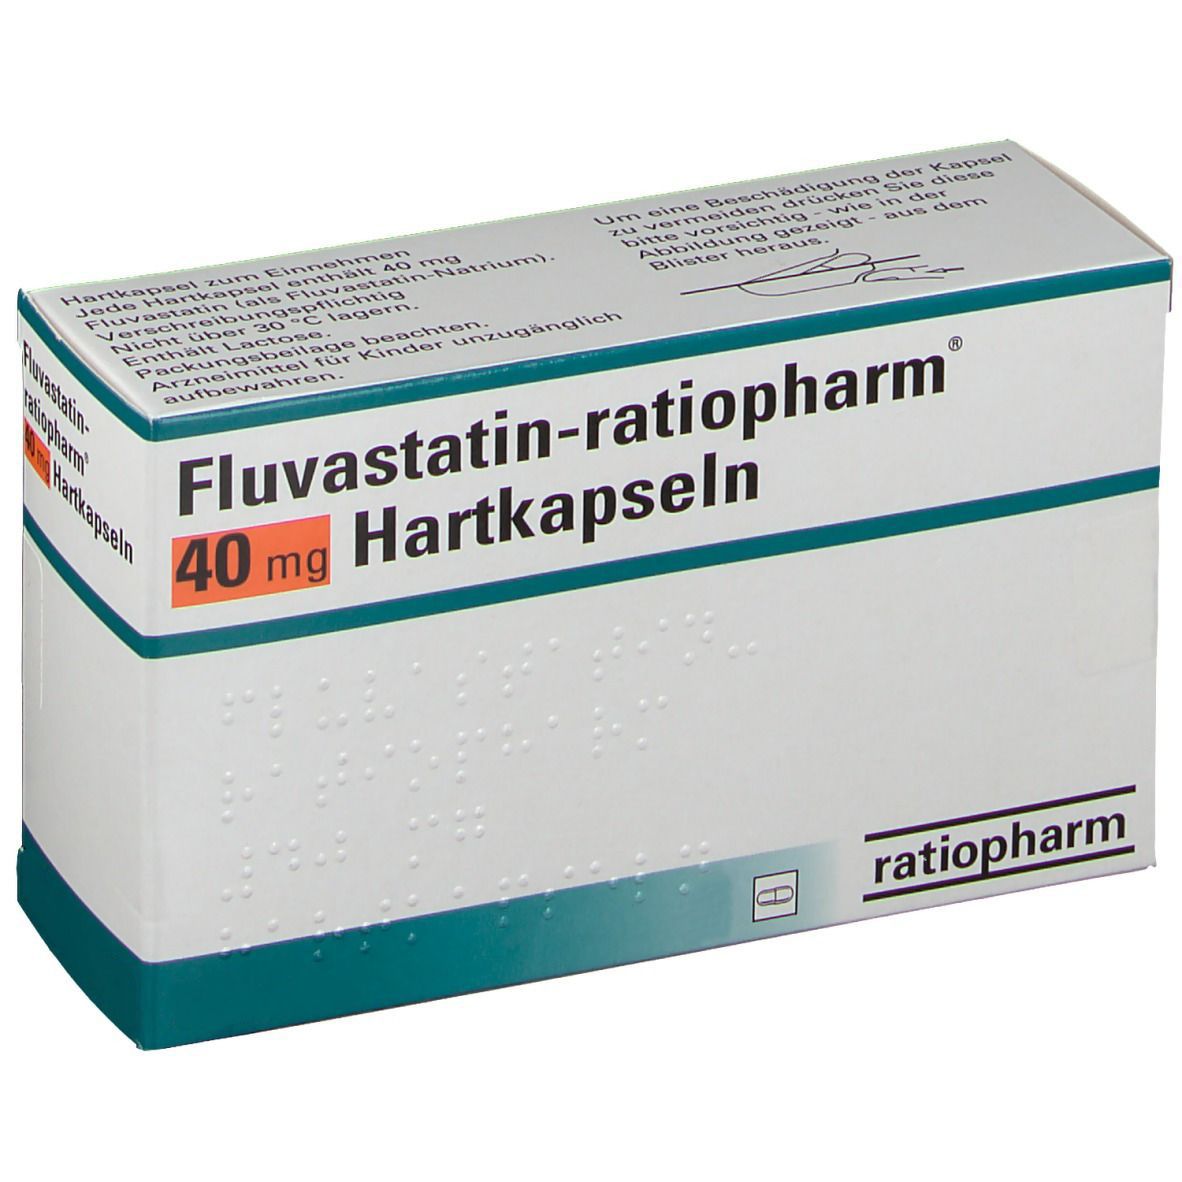 Fluvastatin-ratiopharm® 40 mg